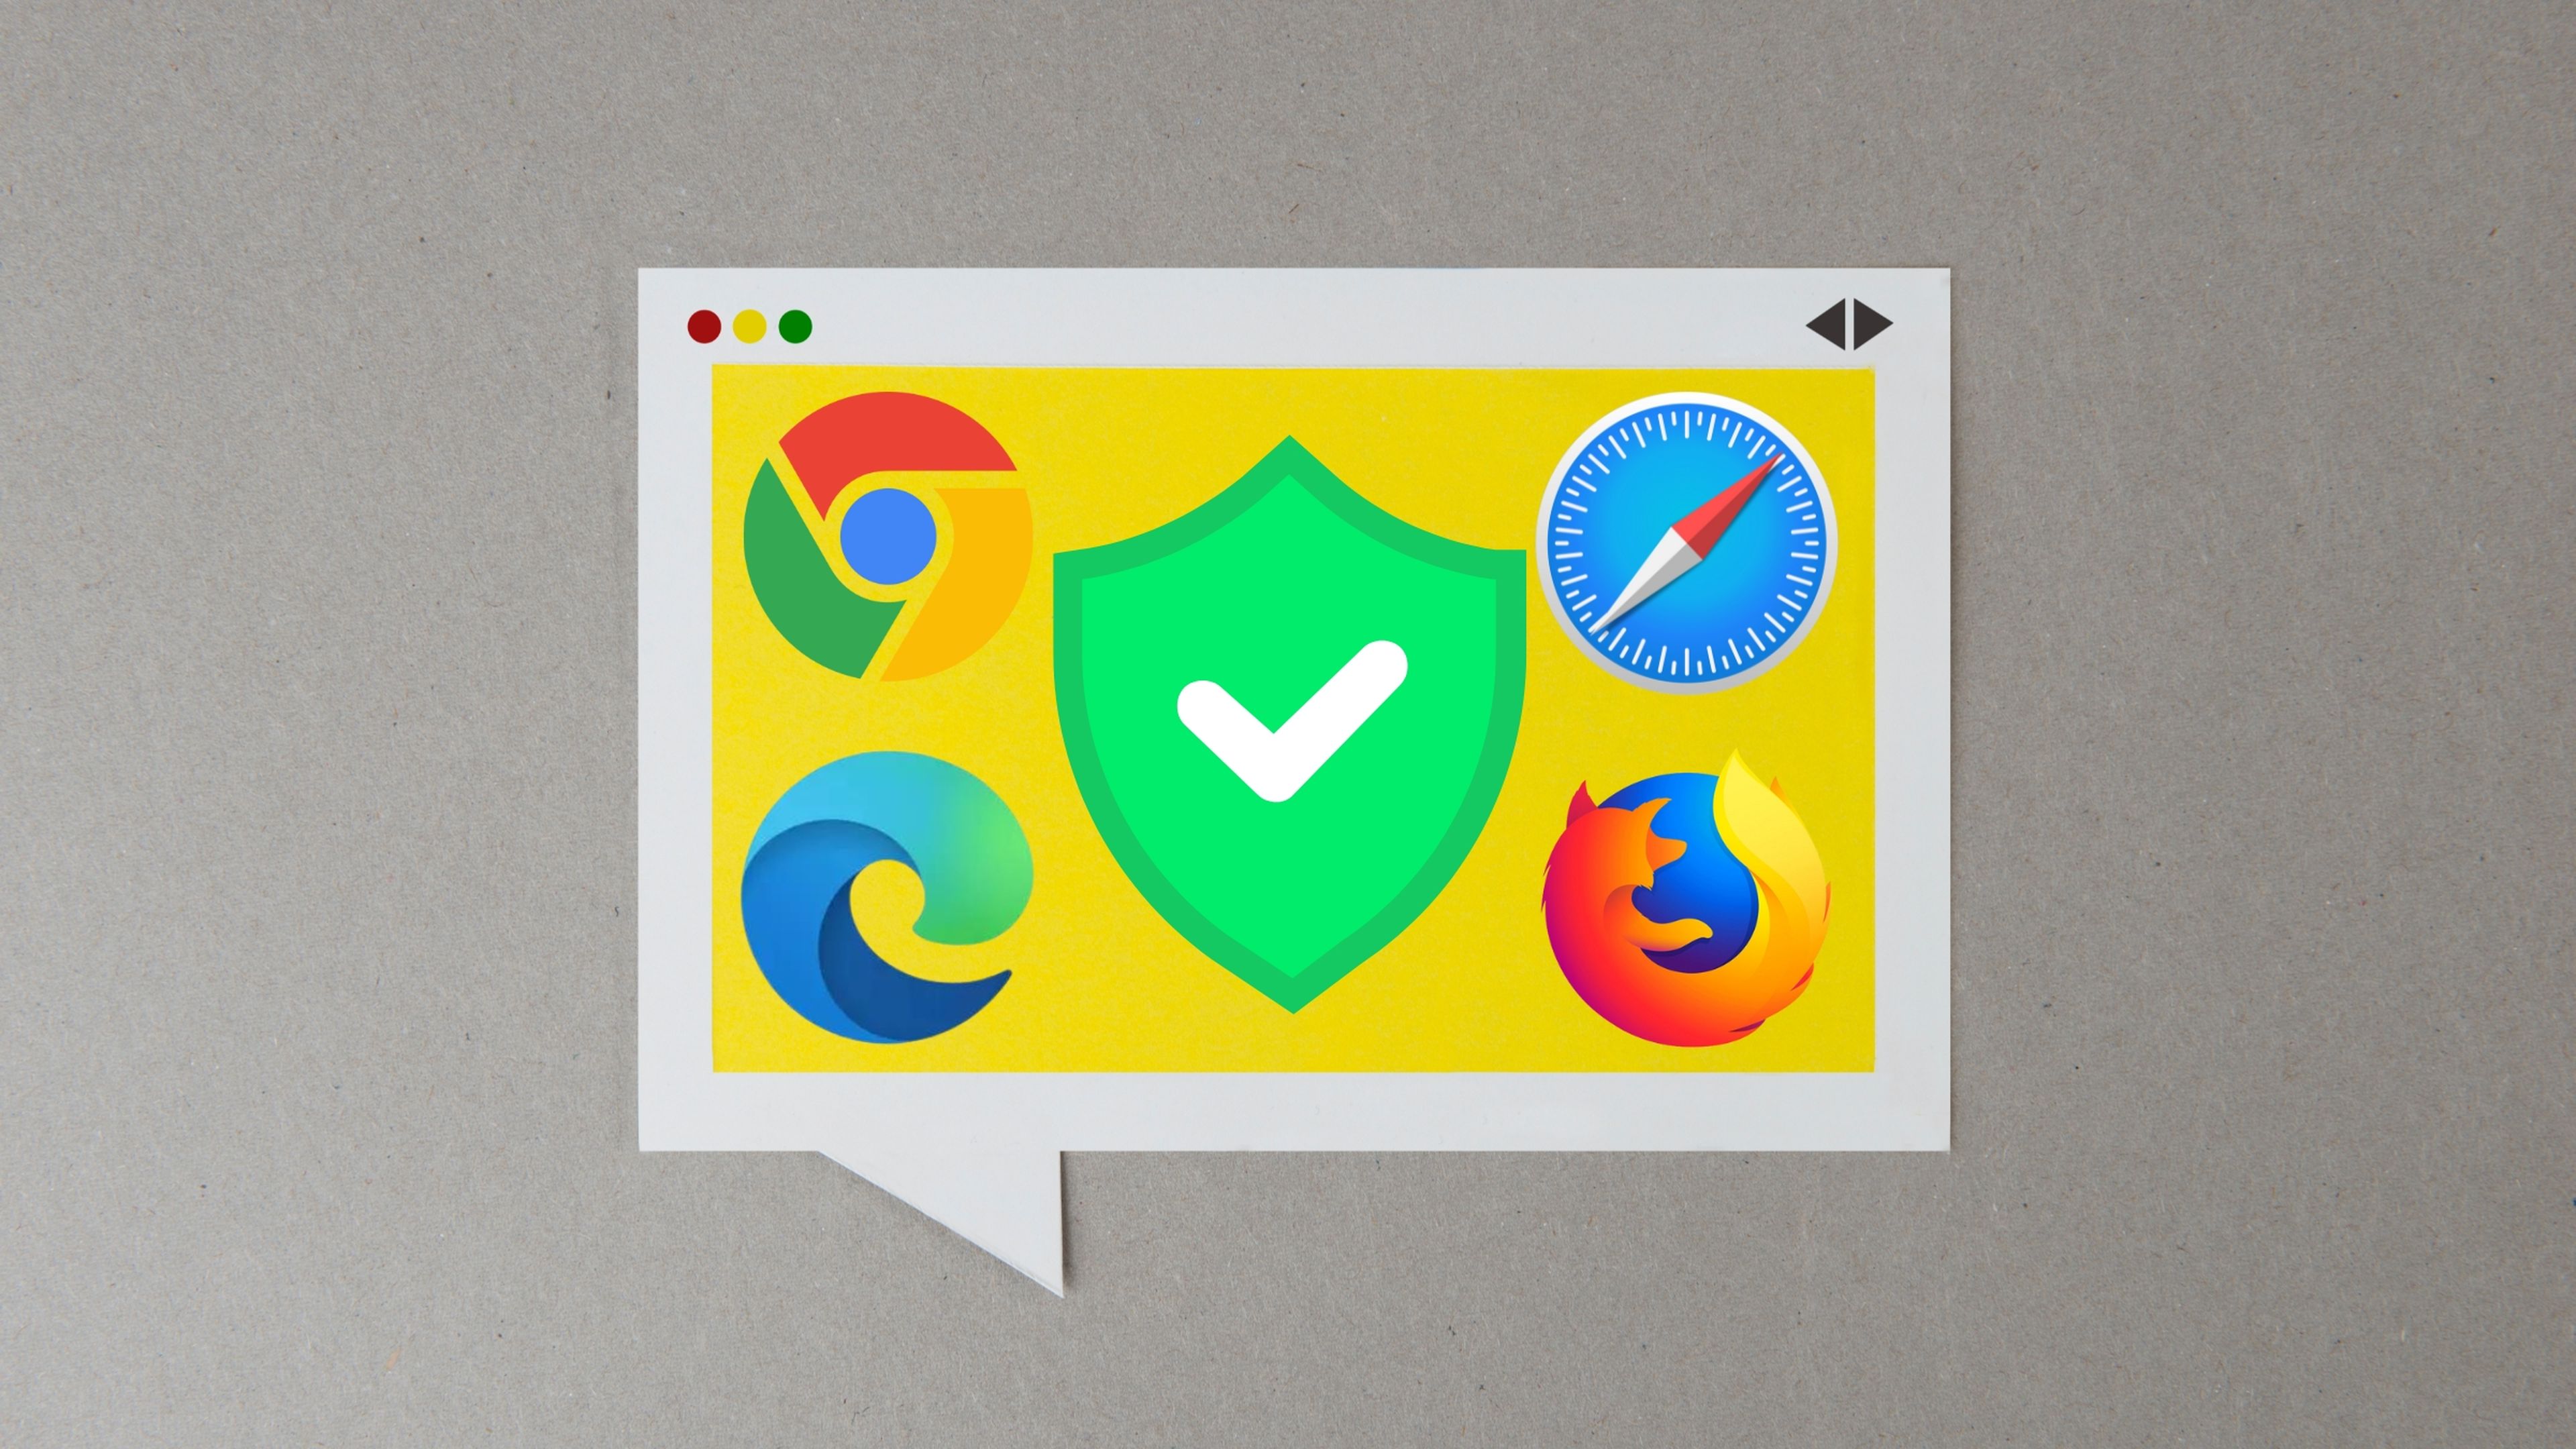 Chrome, Firefox, Edge o Safari: ¿cuál es el navegador más seguro?